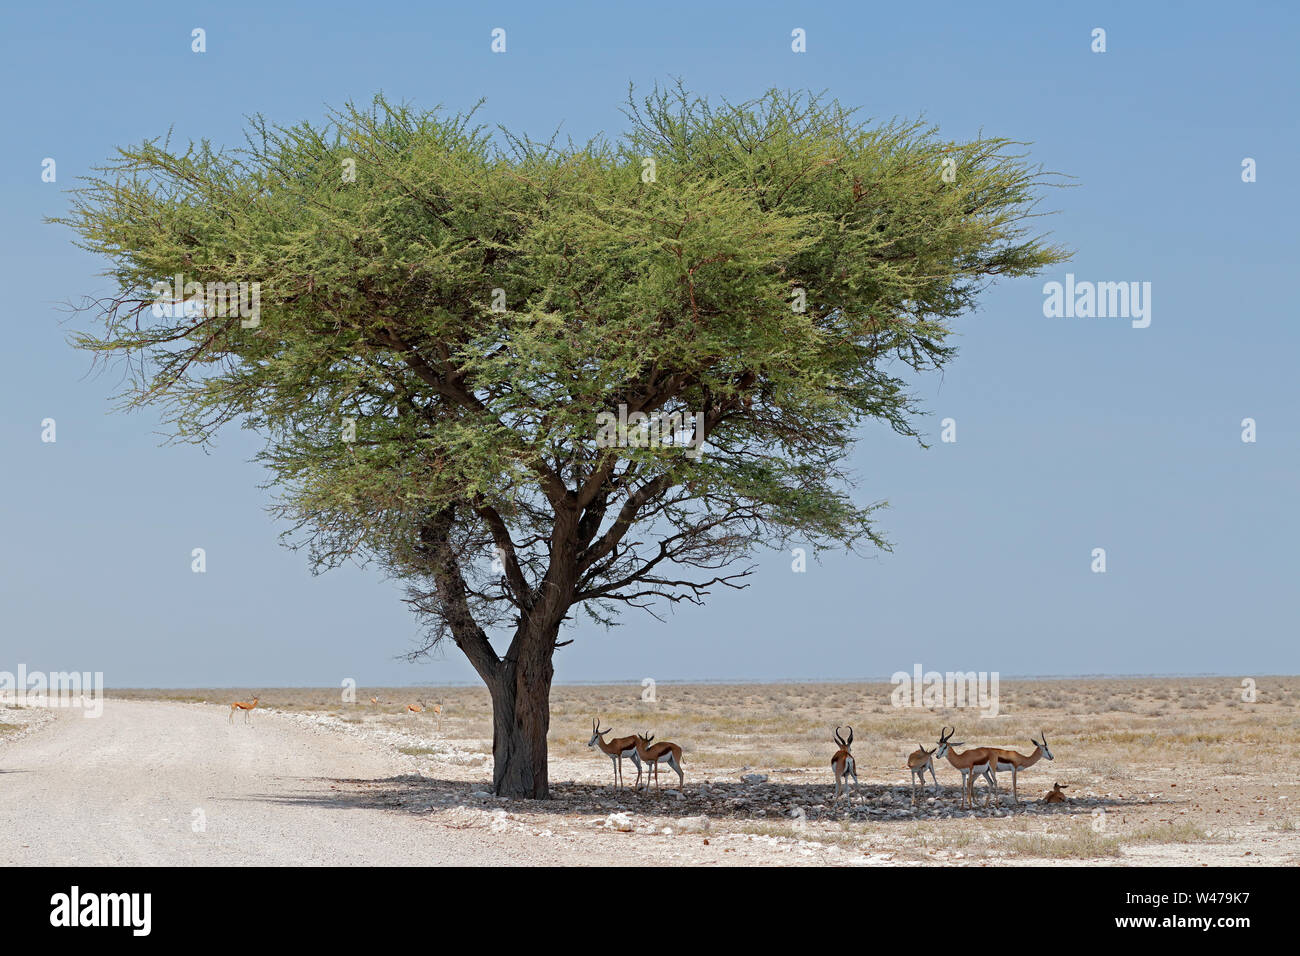 Springbok antelopes (Antidorcas marsupialis) in arid landscape, Etosha National Park, Namibia Stock Photo